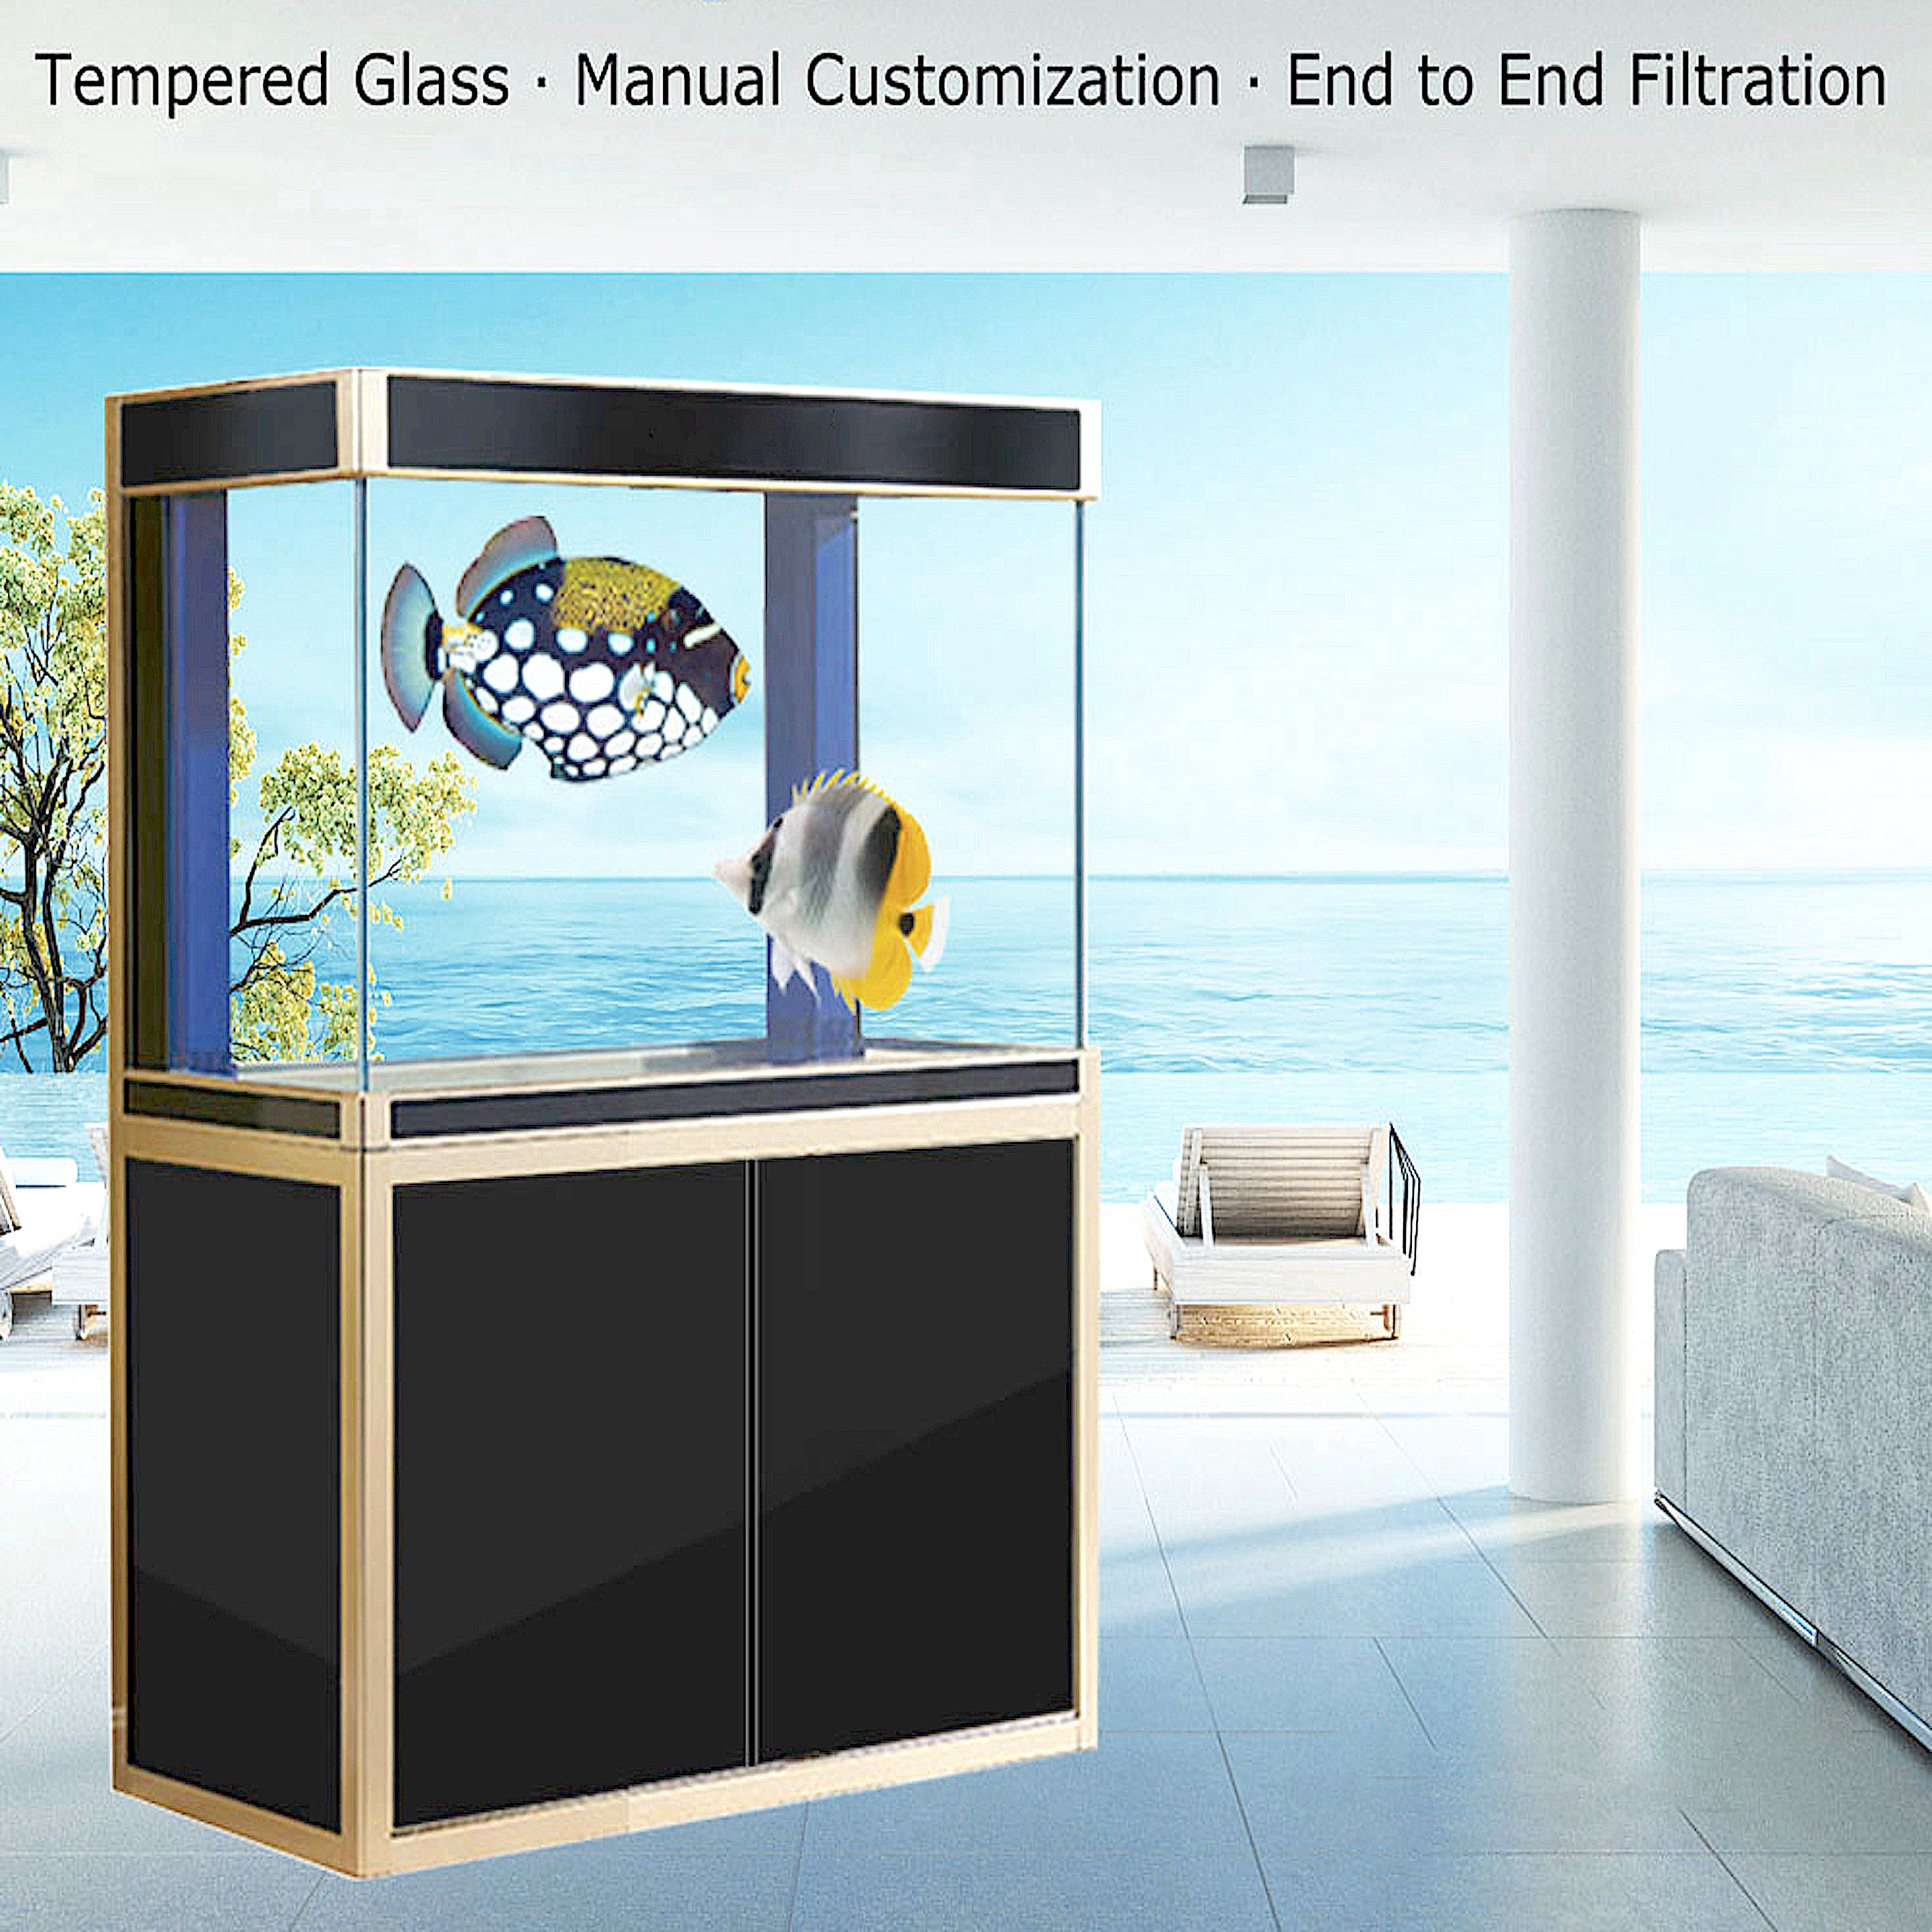 Aqua Dream 100 Gallon Tempered Glass Aquarium Black and Gold